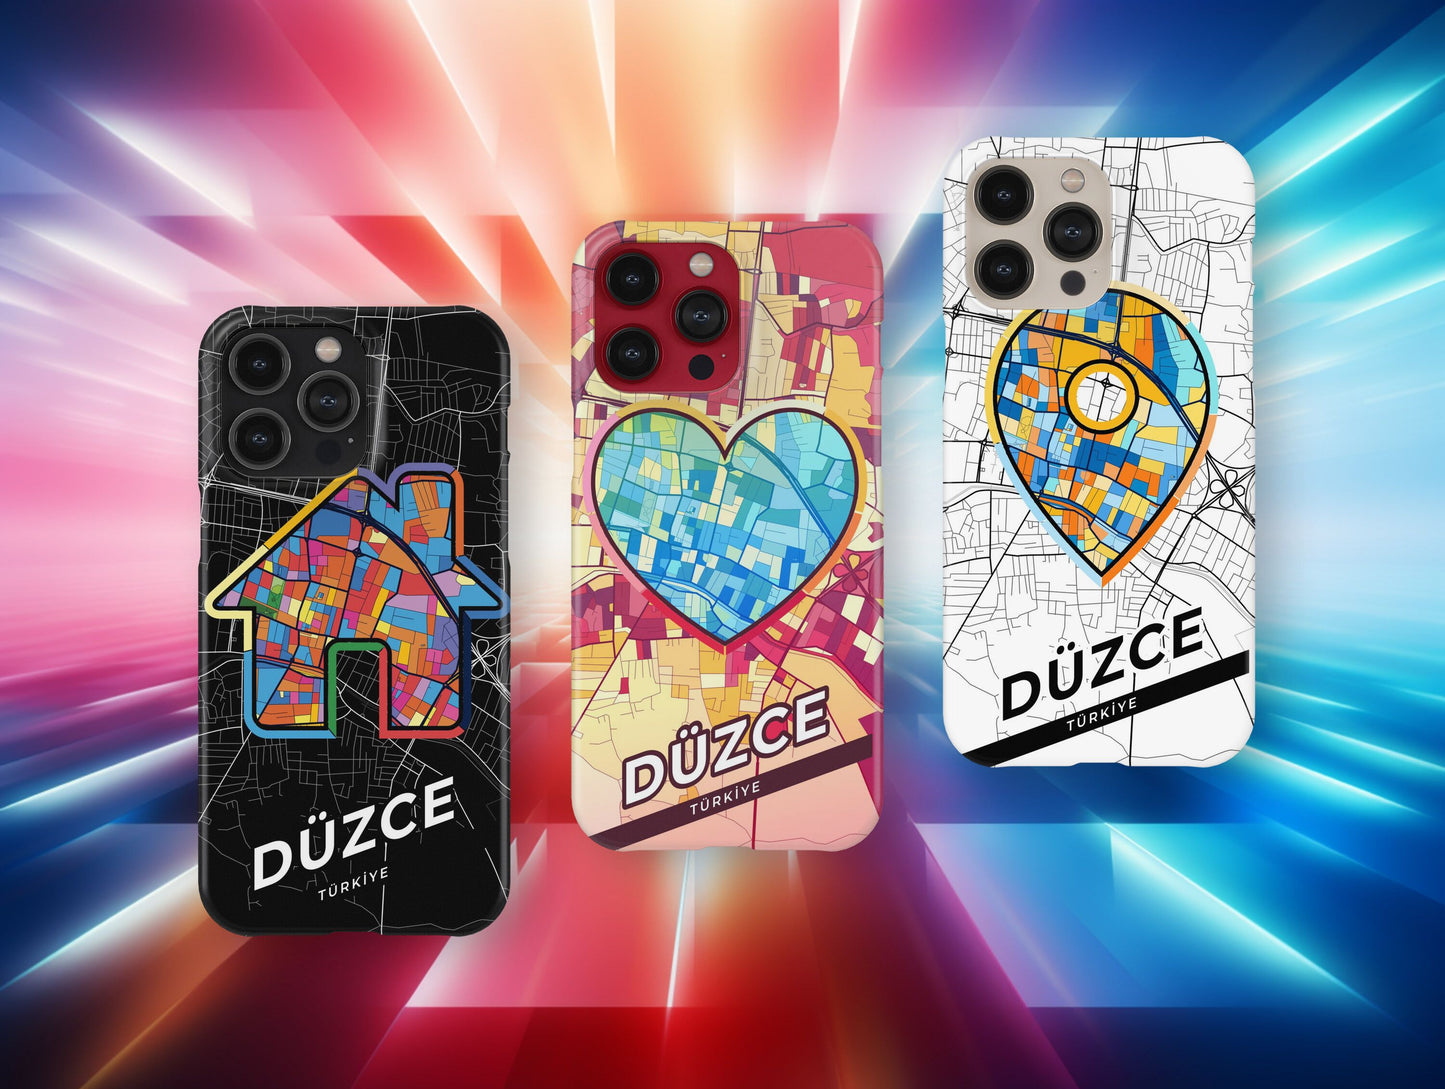 Düzce Turkey slim phone case with colorful icon. Birthday, wedding or housewarming gift. Couple match cases.